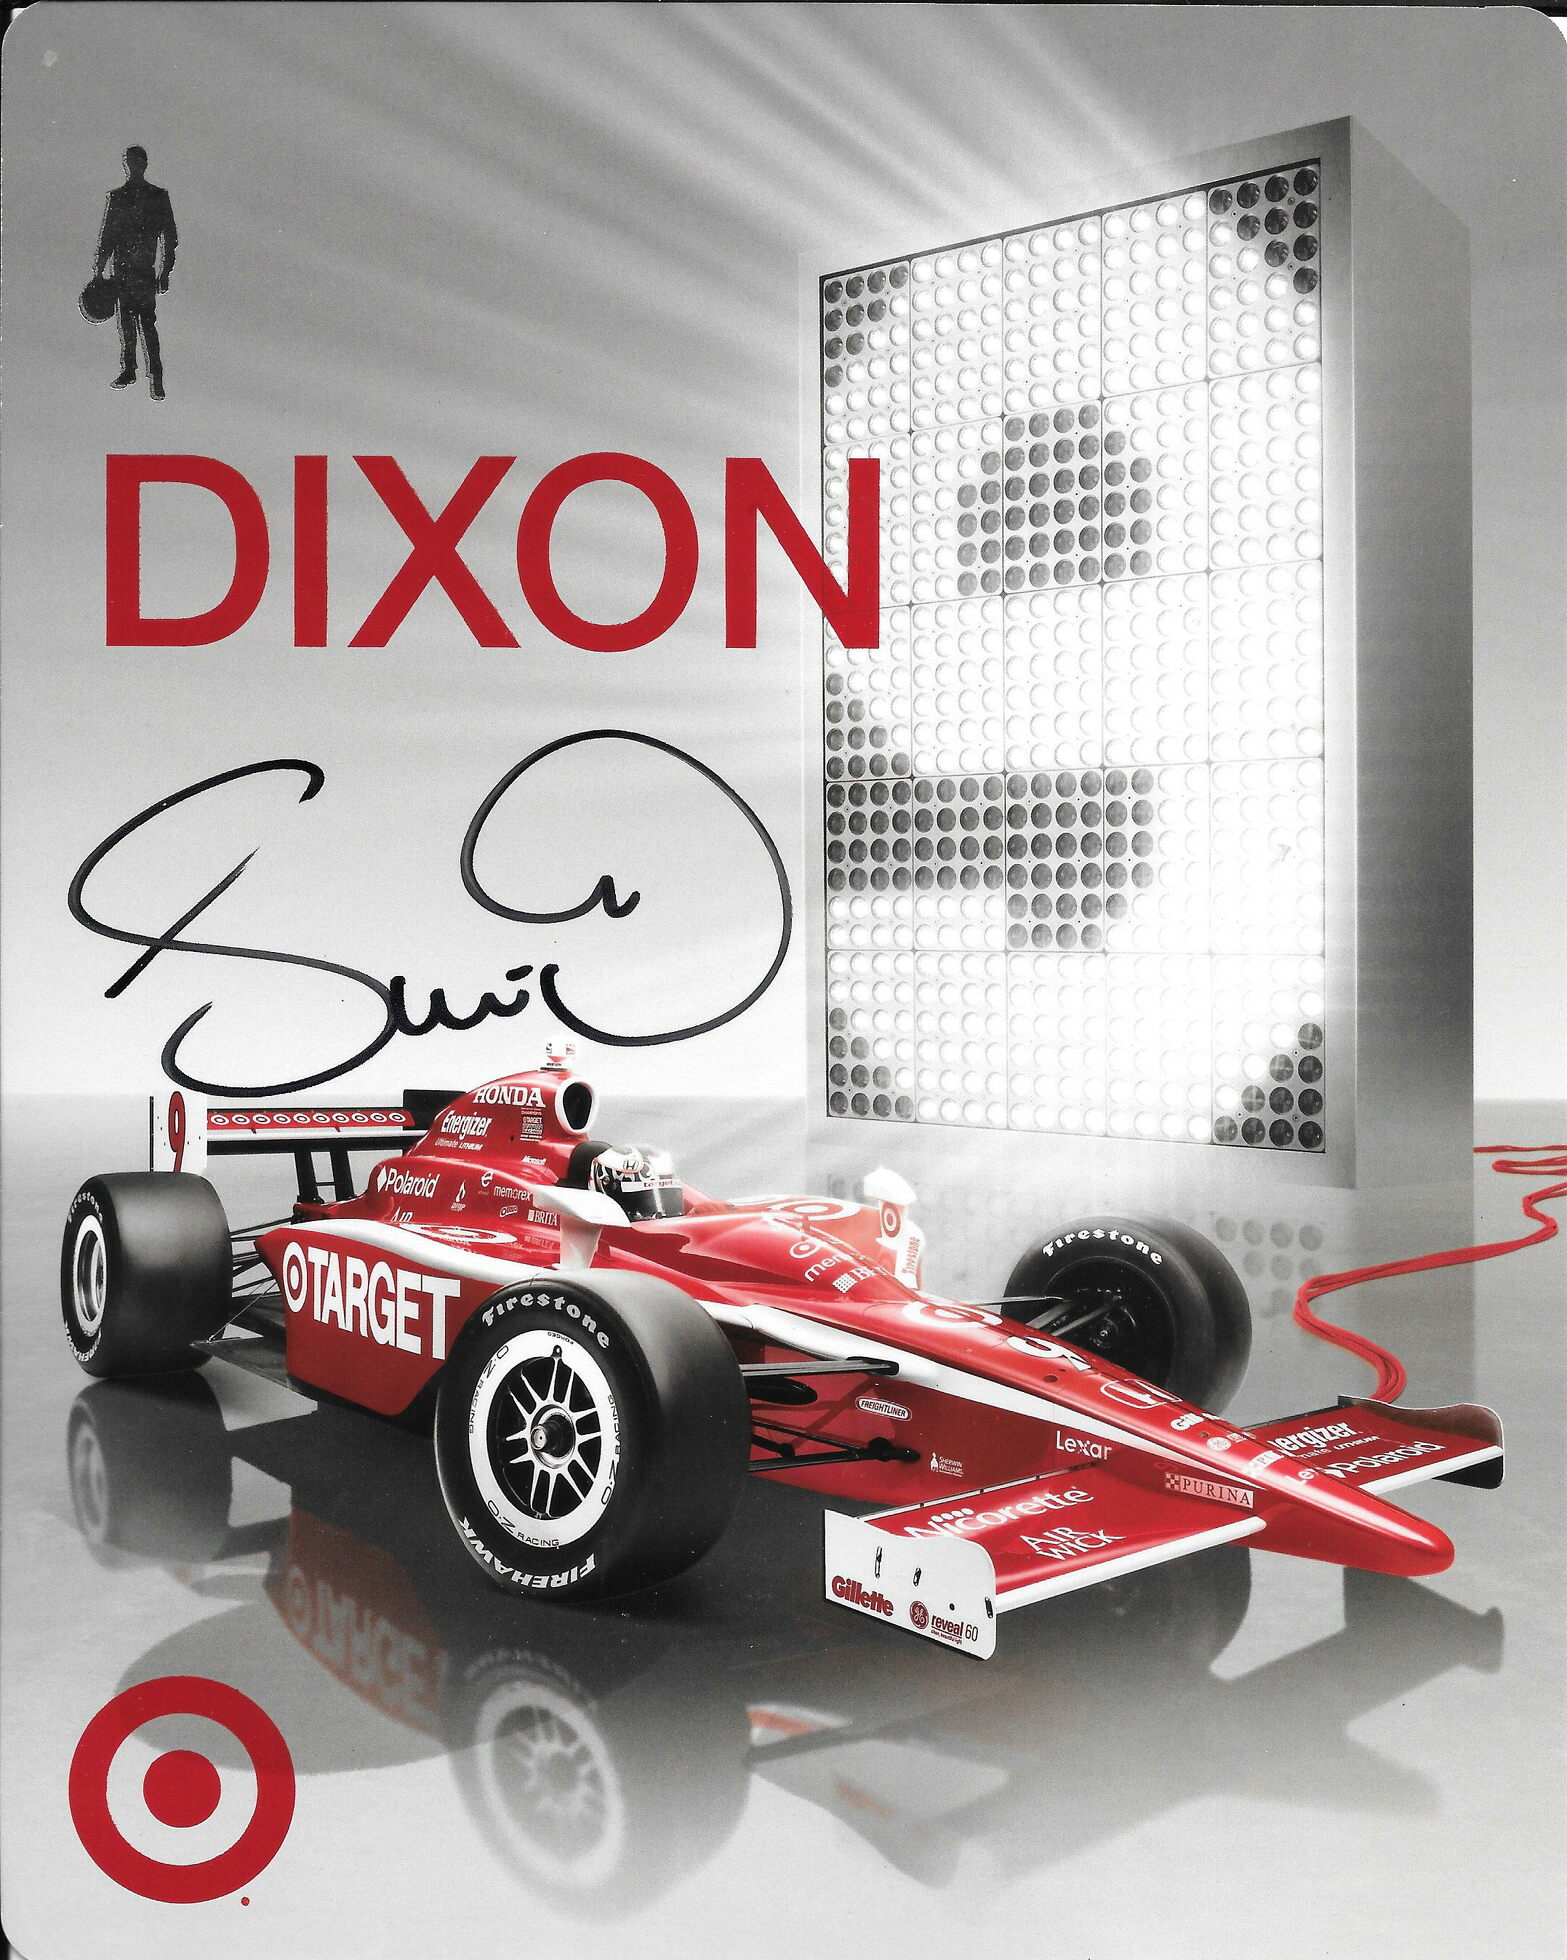 Scott Dixon Indianapolis Indy 500 Signed Car Promo Card Autographed